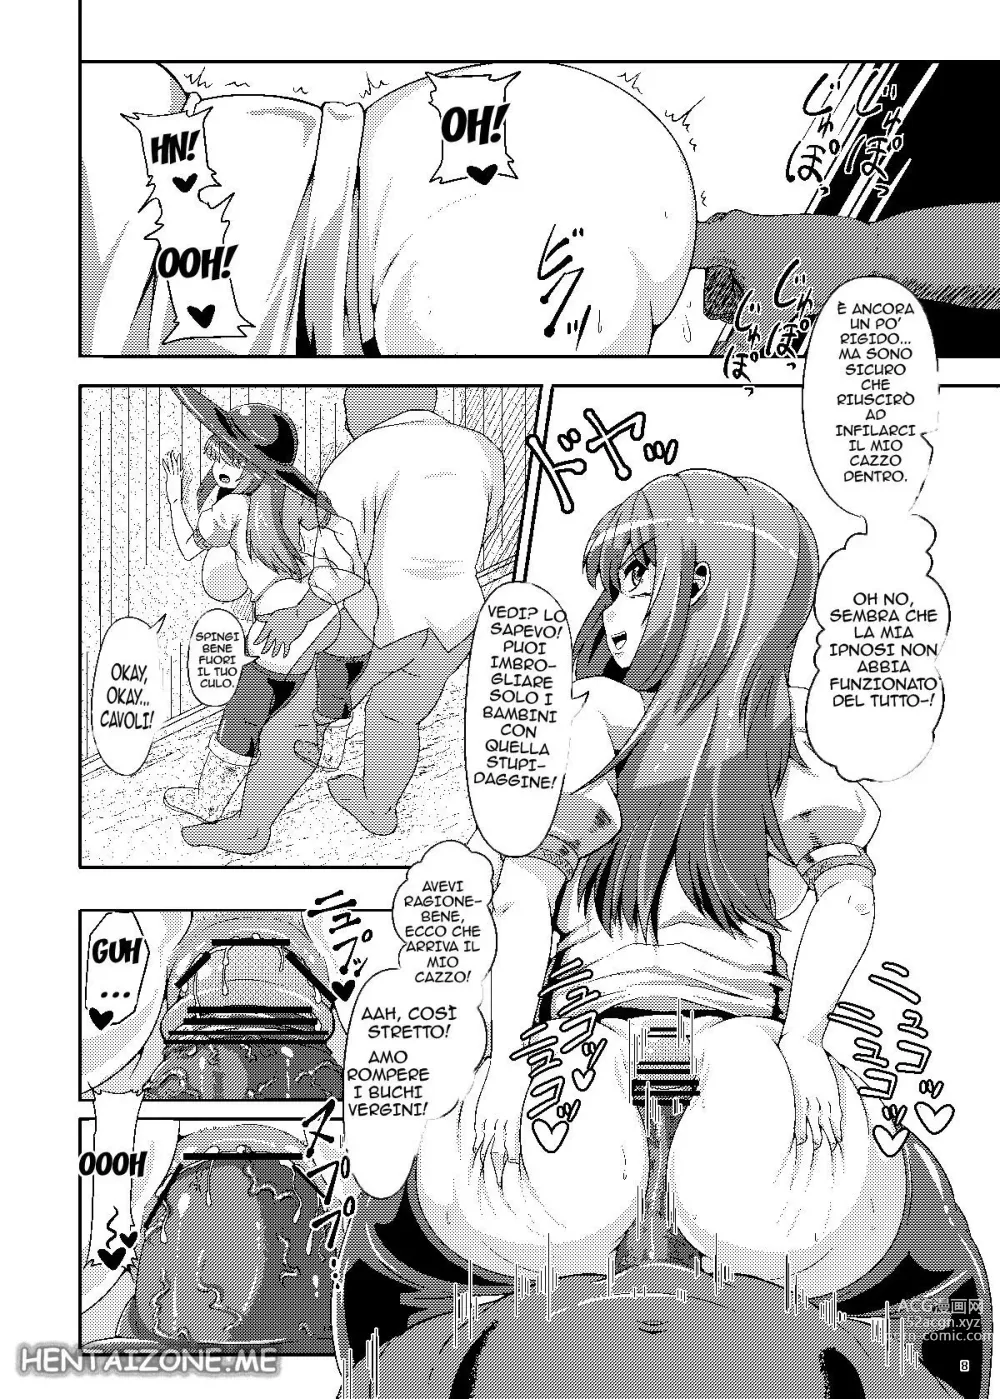 Page 7 of doujinshi Controllo Inconsapevole